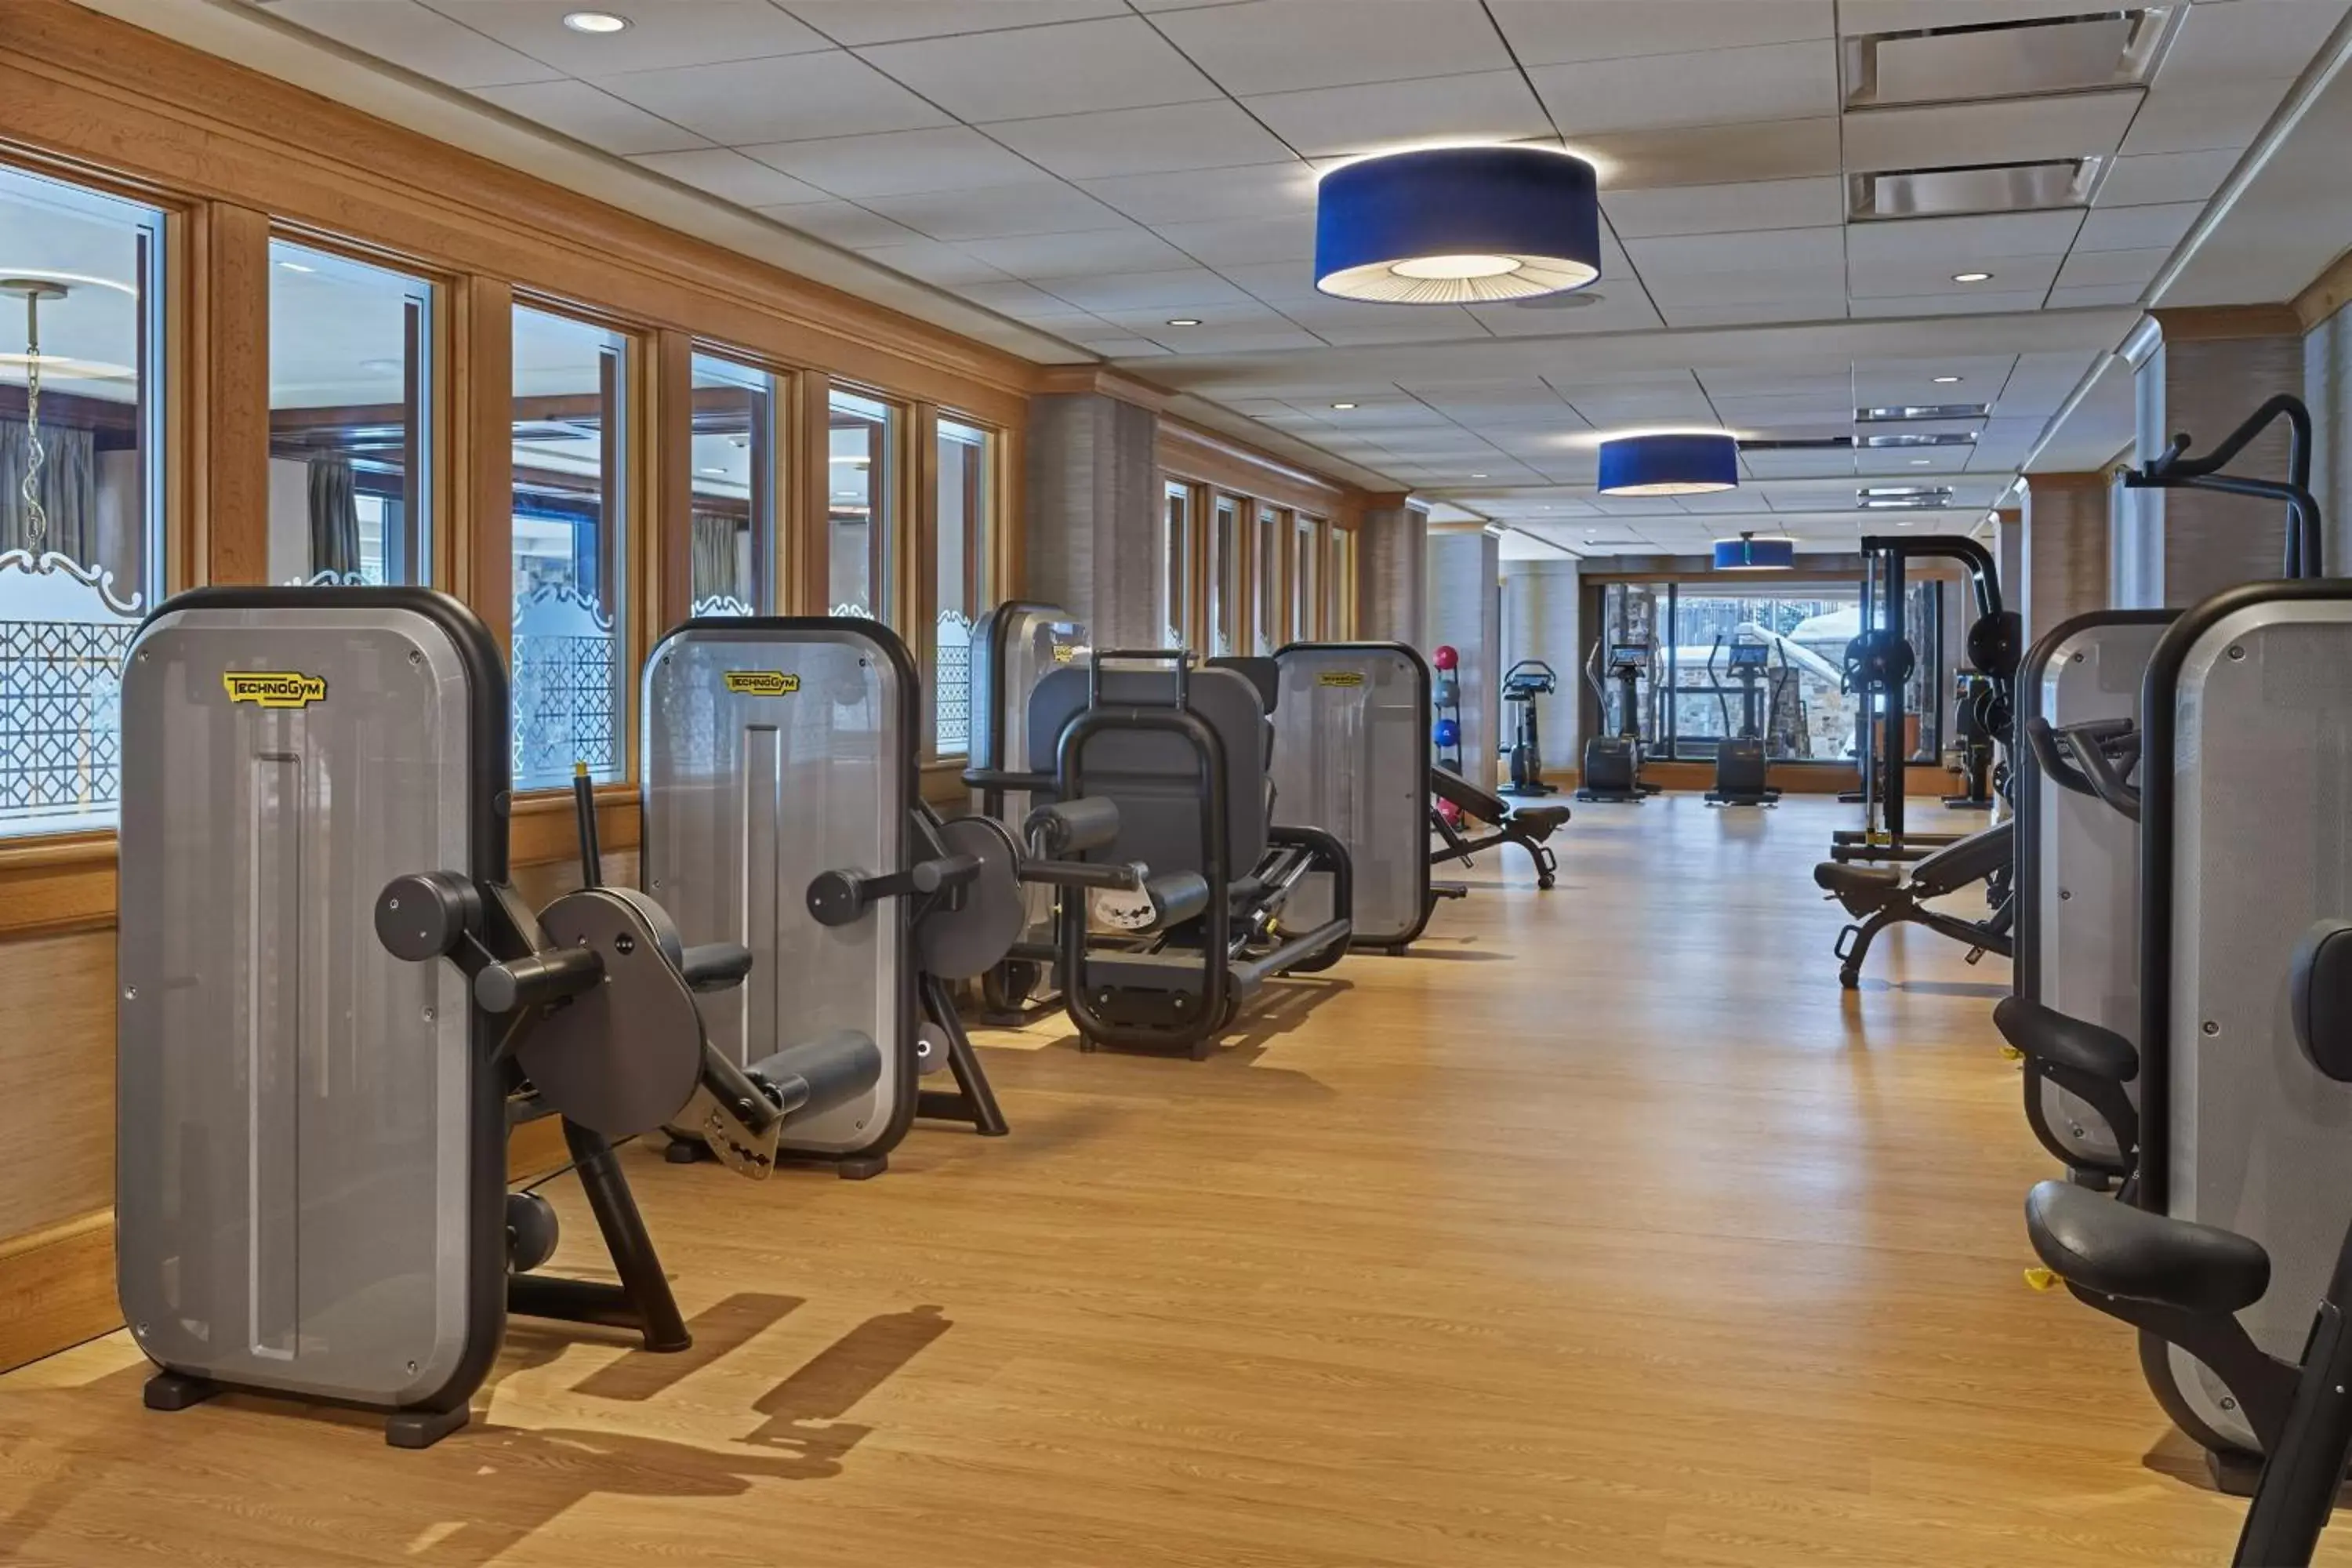 Fitness centre/facilities, Fitness Center/Facilities in St. Regis Deer Valley